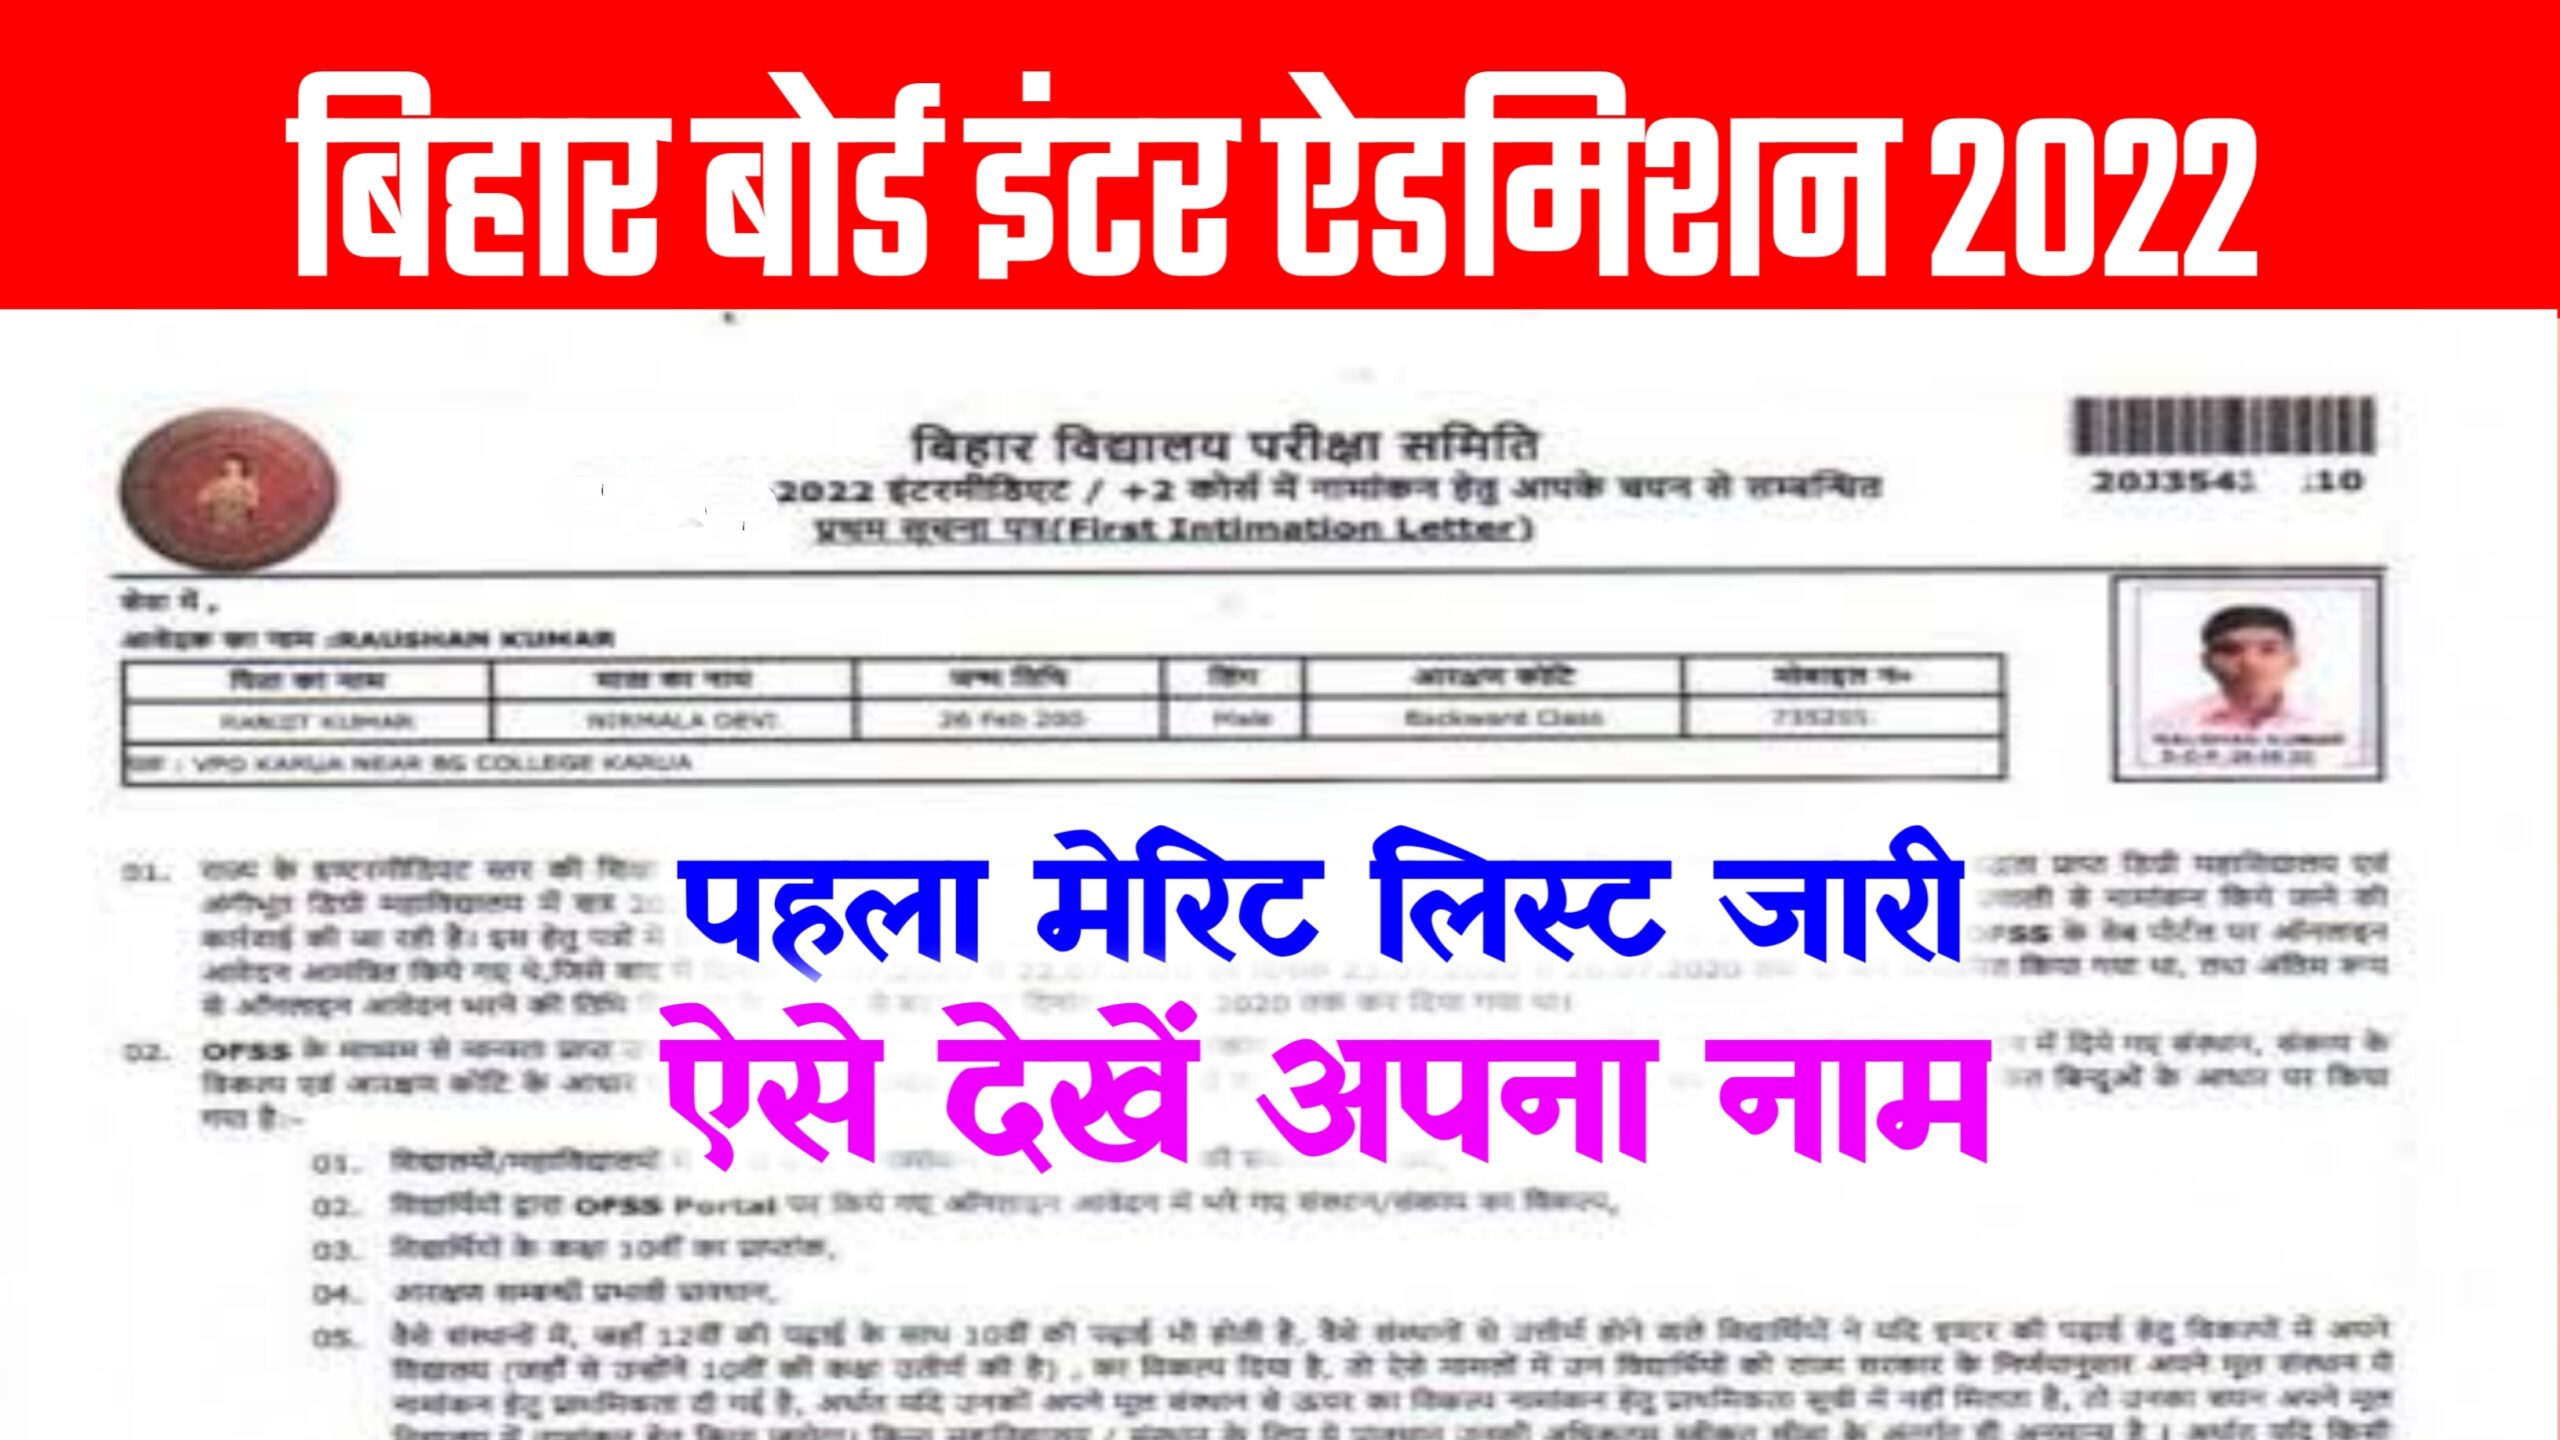 Bihar Board 11th 1st Merit List 2022 Download ~ Ofss Inter @ofssbihar.in